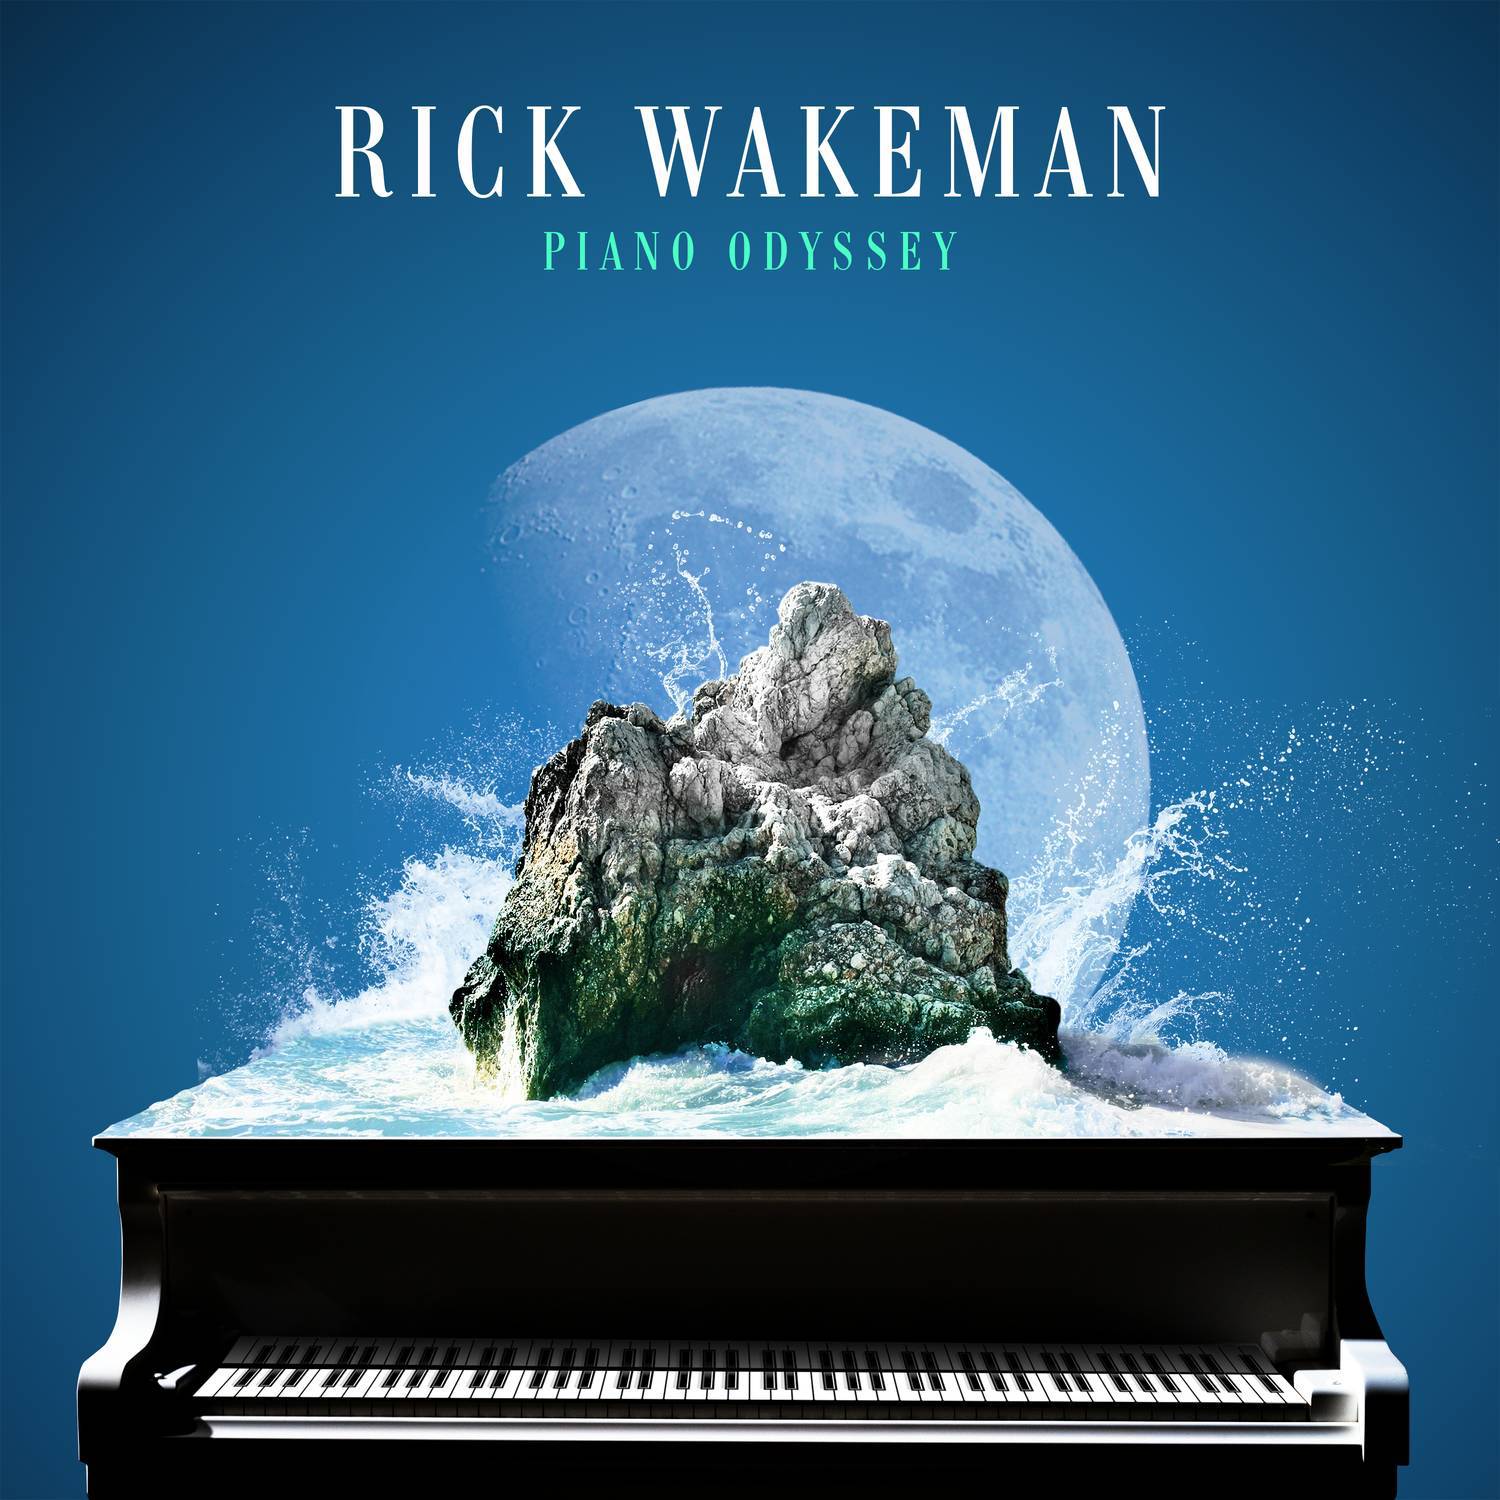 Bohemian Rhapsody (Arranged for Piano, Strings & Chorus by Rick Wakeman)